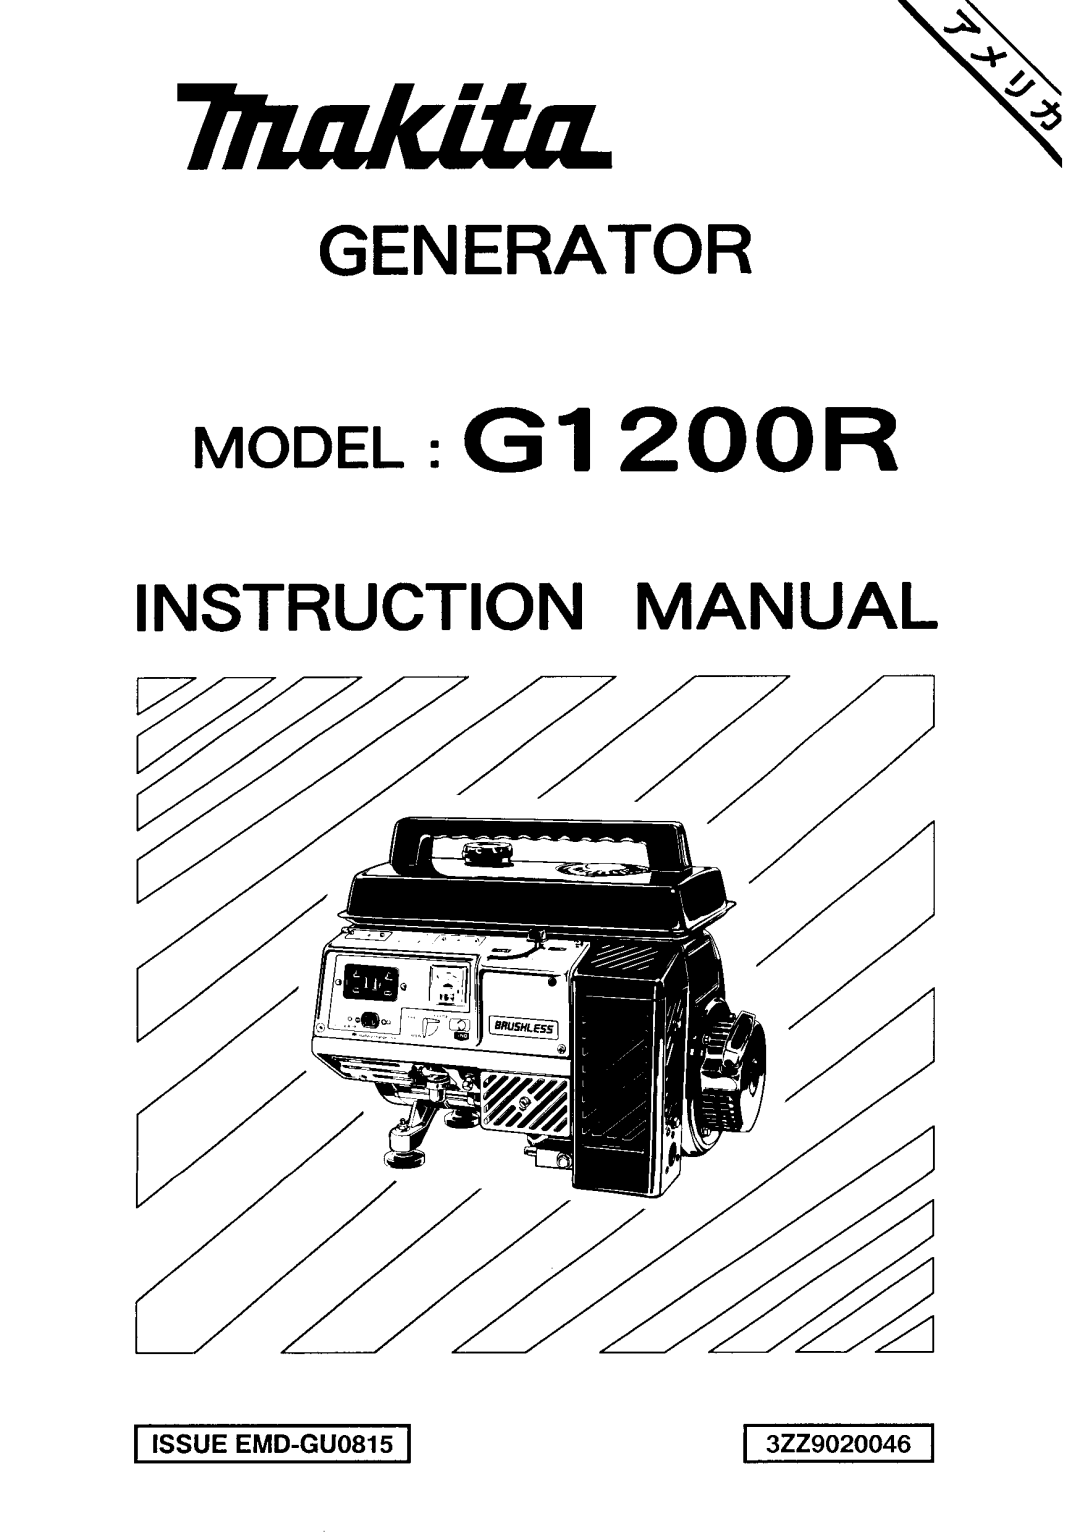 Makita G1200R instruction manual Model Gi Z O O R, Generator, I ISSUE EMD-GU0815 